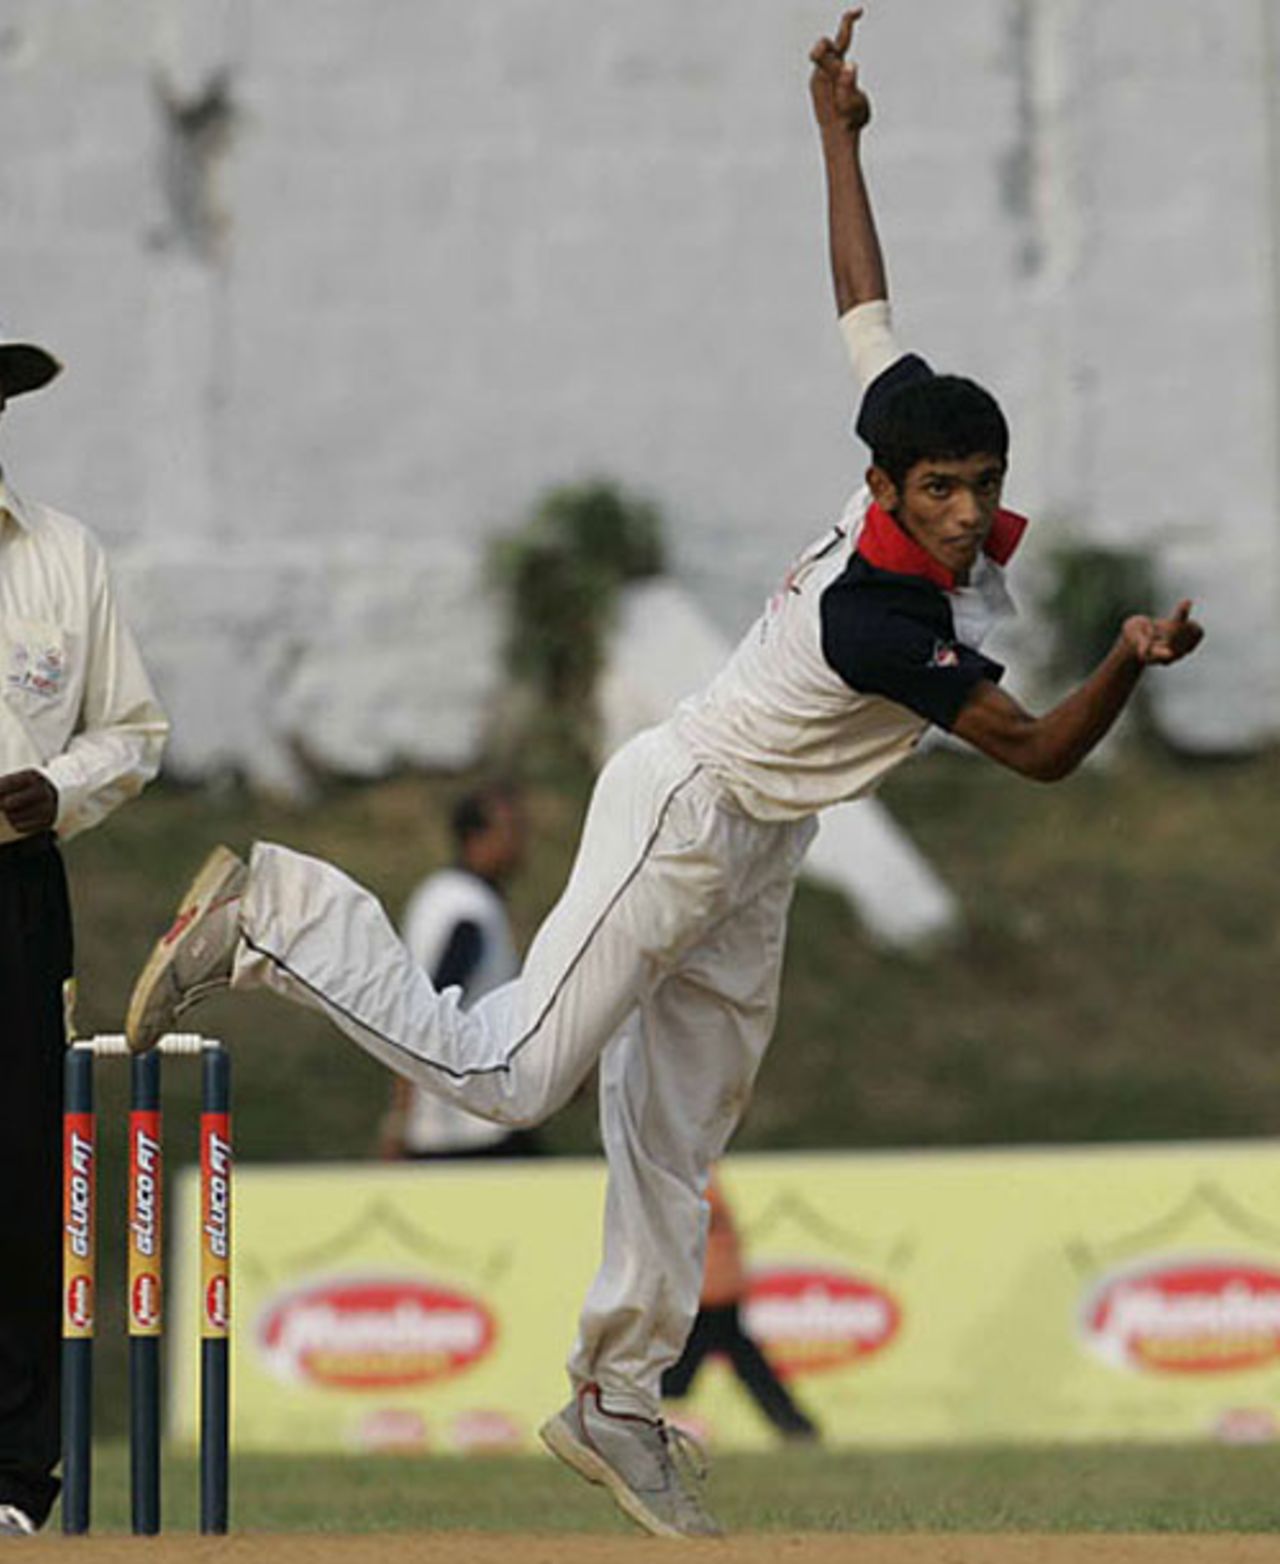 Roscoc Thattil in action, Nalanda College v St. Joseph's College, 1st semi-final, Glucofit Cricket Sixes, Colombo, October 18, 2009 